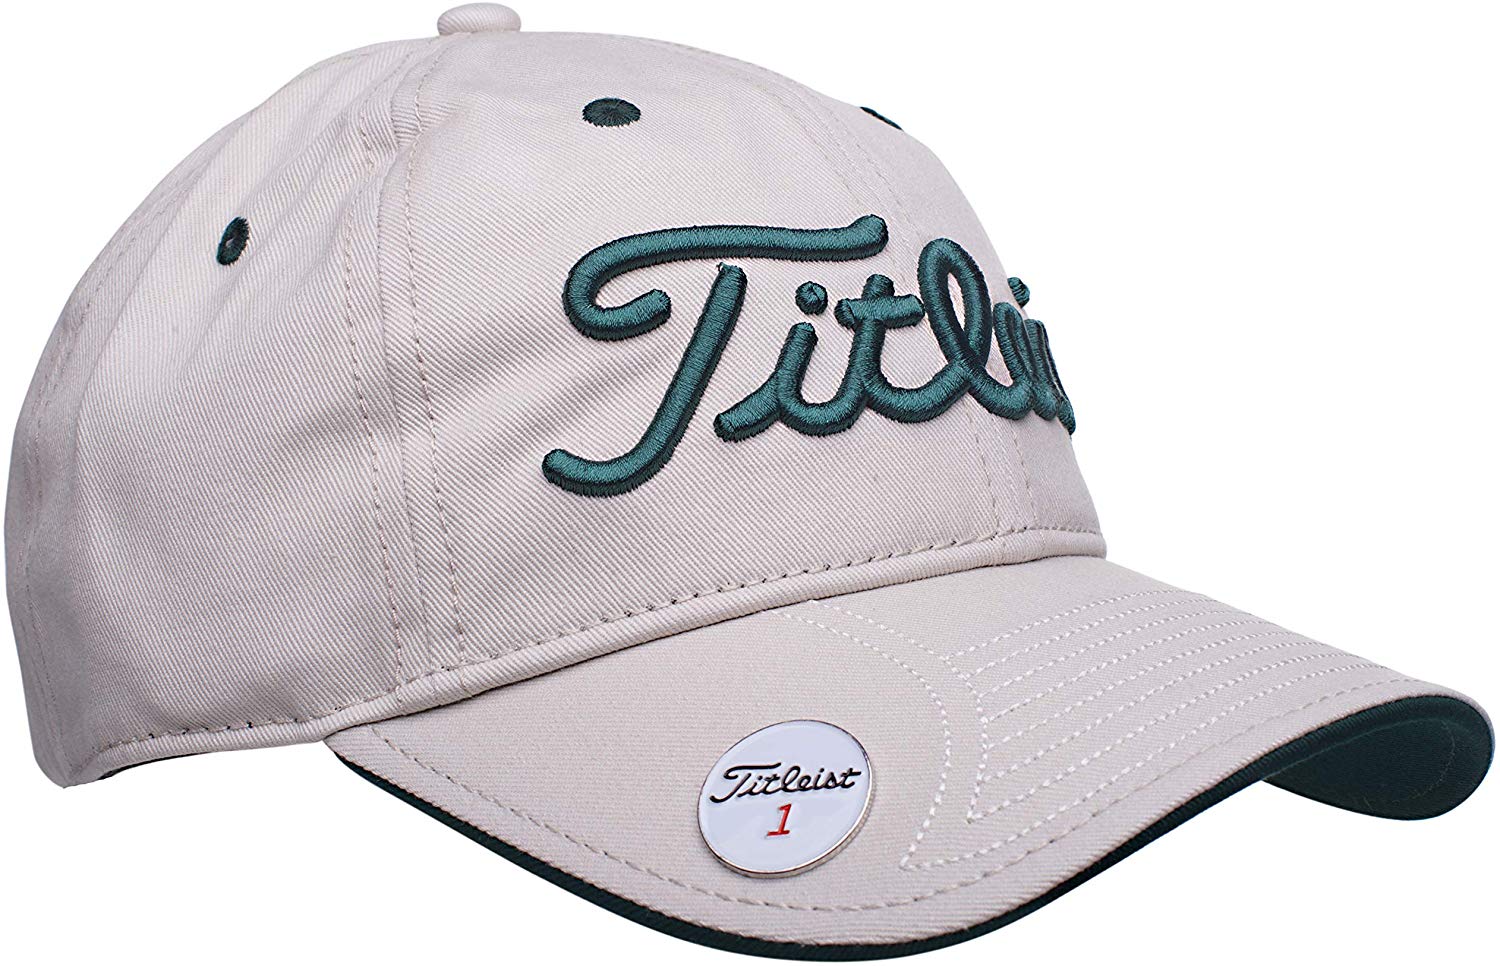 Titleist Mens Fashion Golf Ball Marker Hats